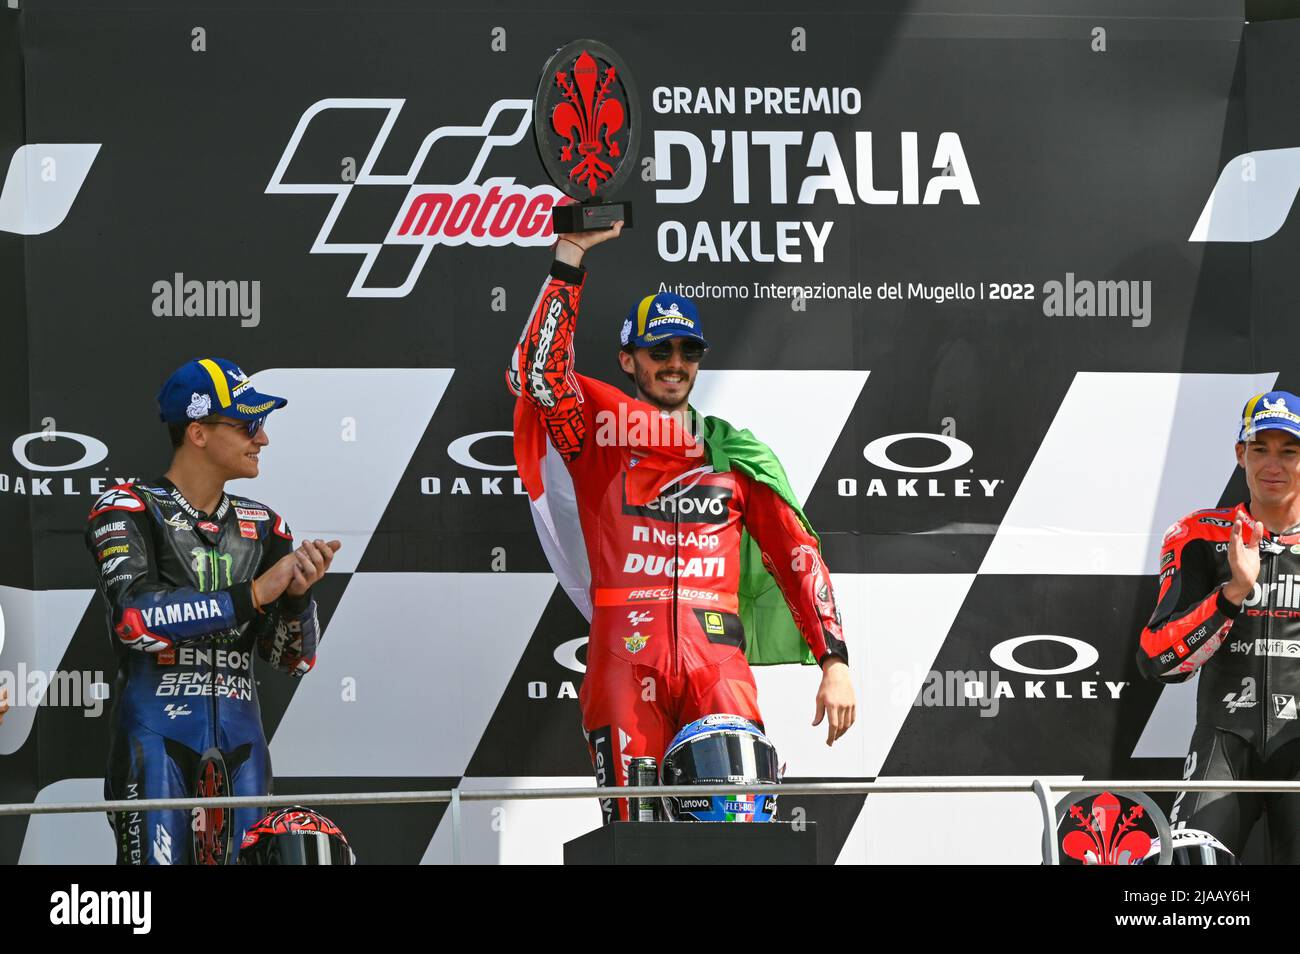 MotoGP trophies during Gran Premio dâ€™Italia Oakley Race, MotoGP  World Championship in Scarperia (FI), Italy, May 29 2022 Stock Photo - Alamy